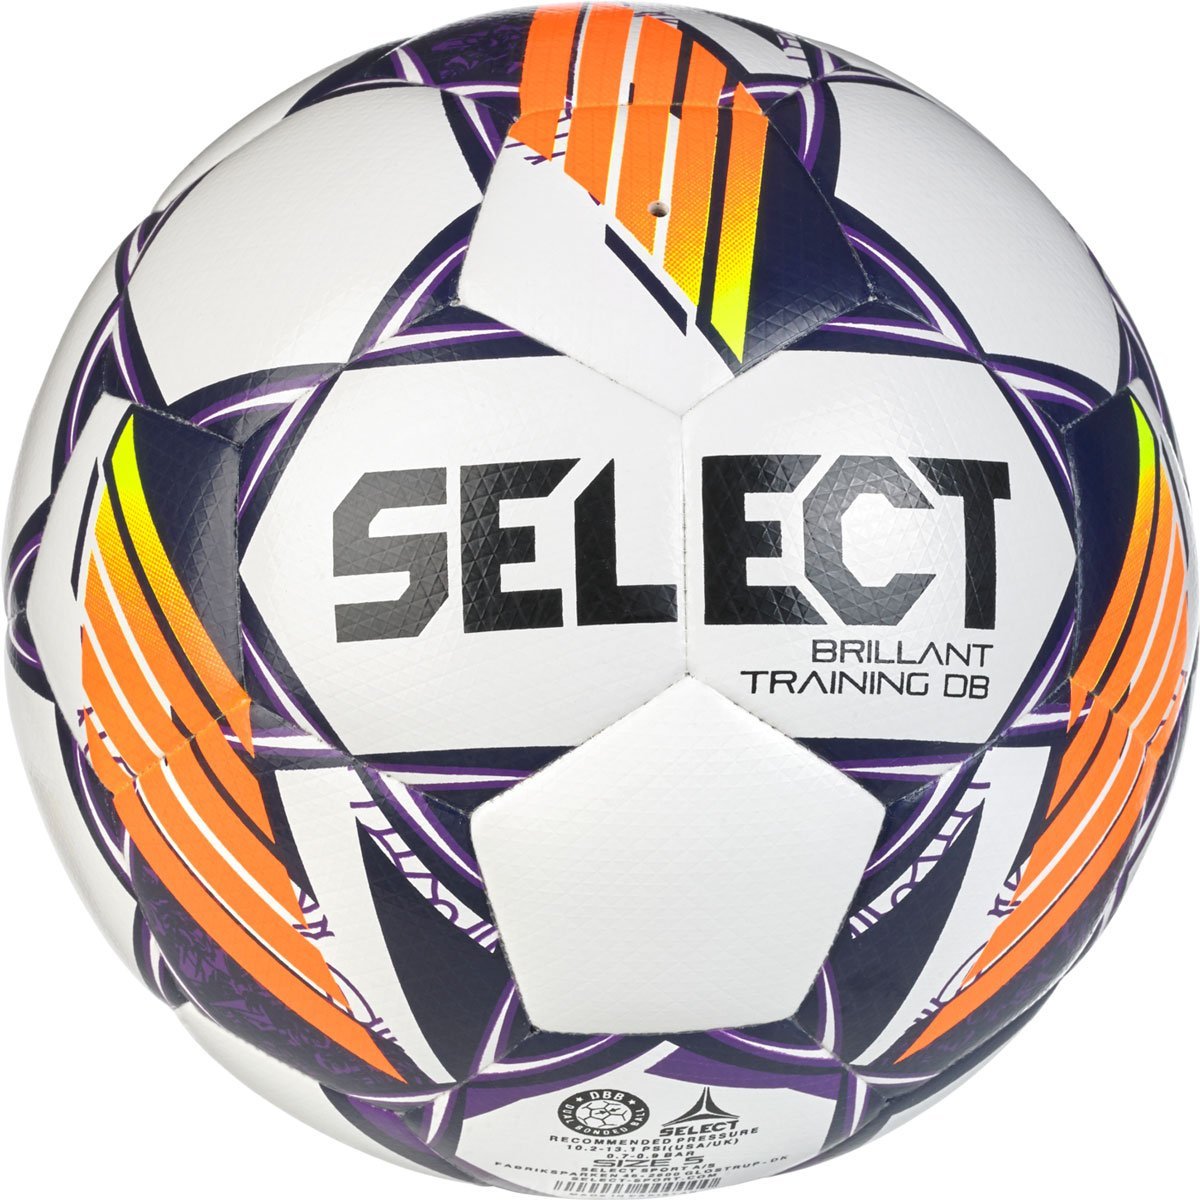 Select Brillant Training DB v24 Fodbold